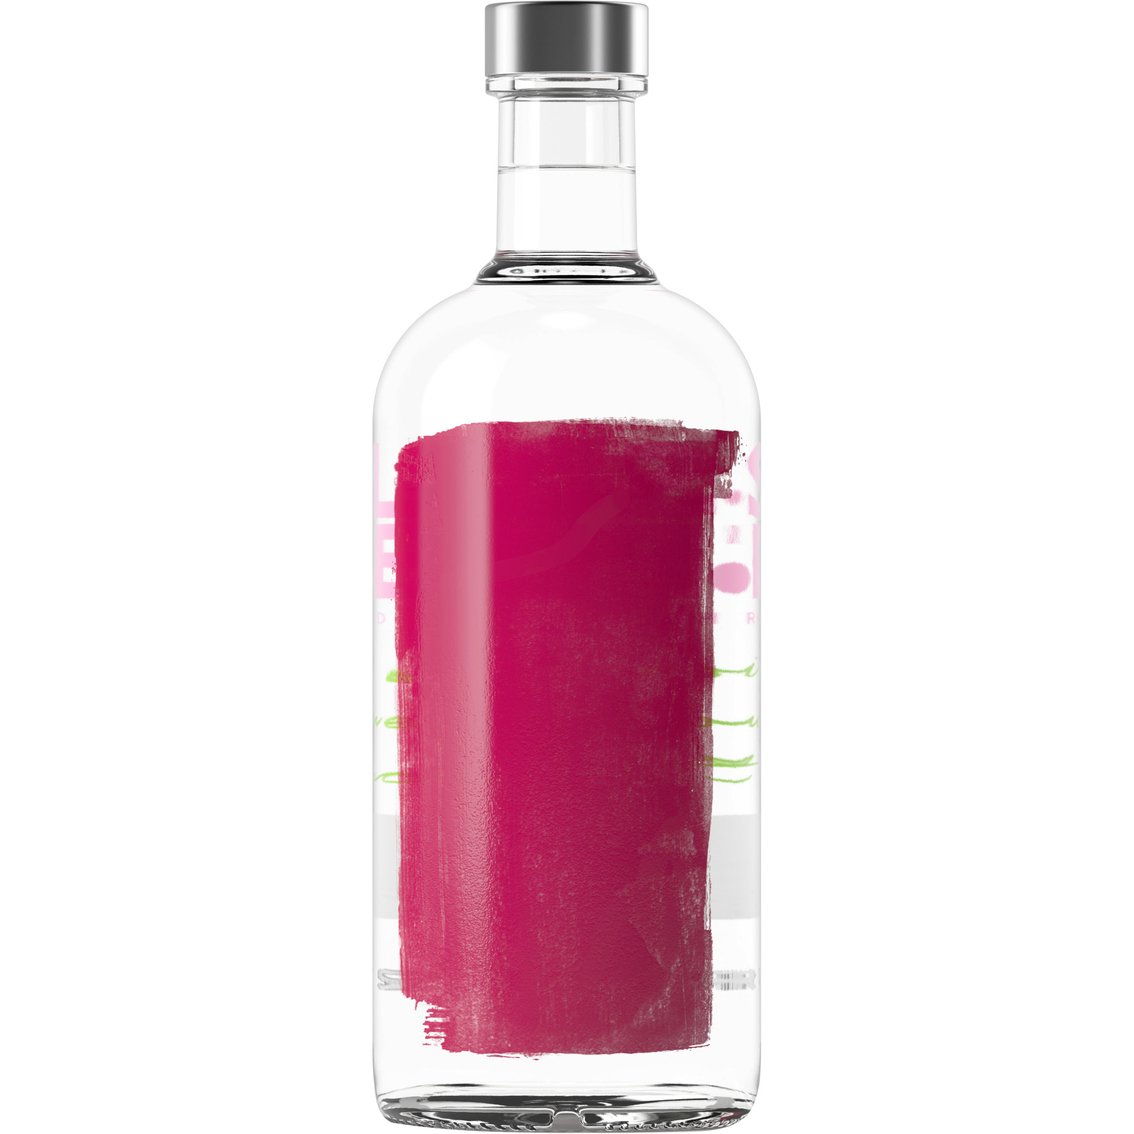 Absolut Raspberri Vodka 750ml - Image 2 of 2